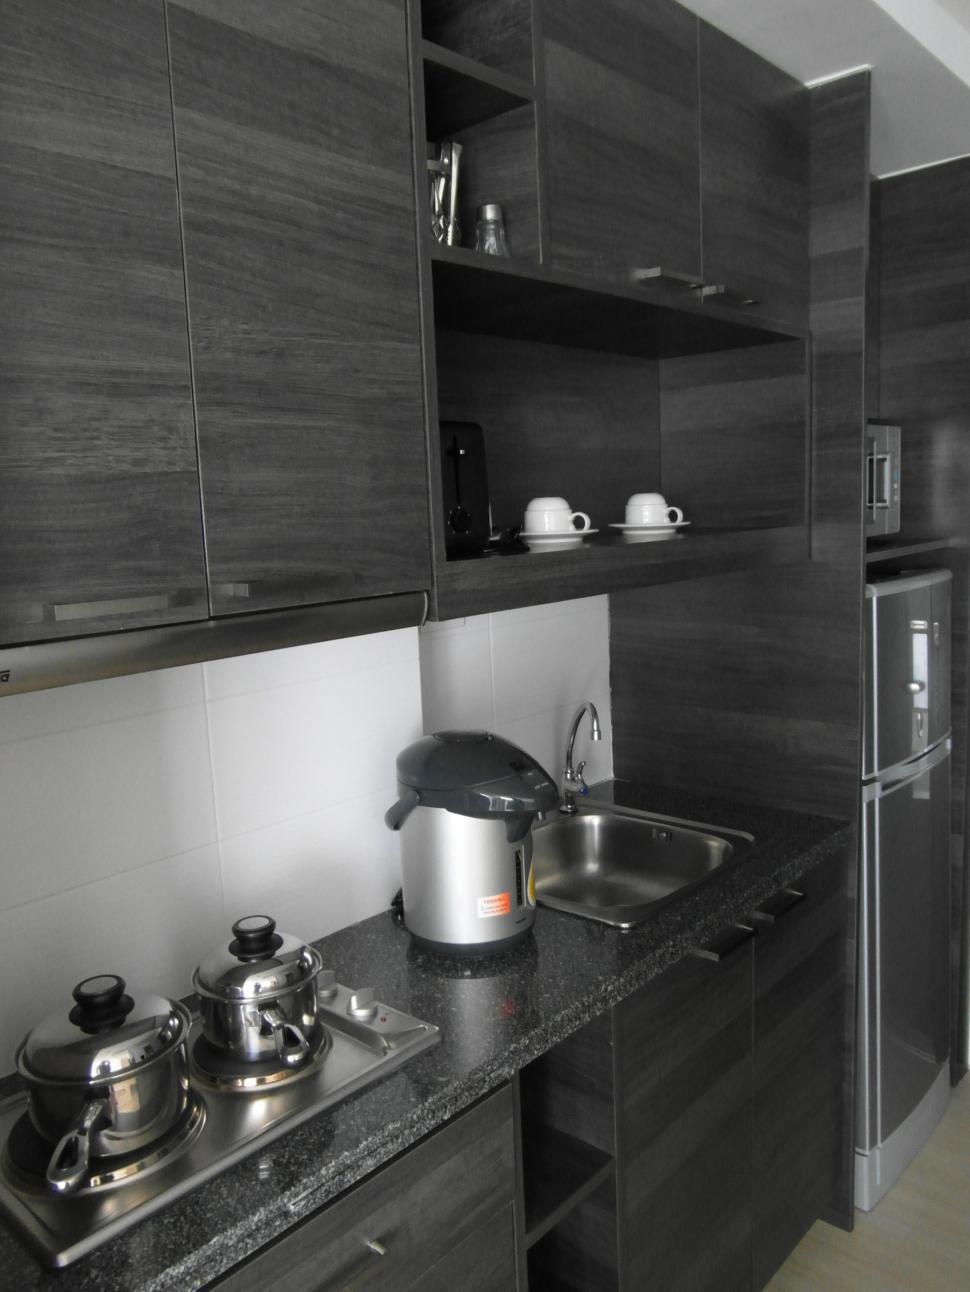 Free Image of Modern Apartment Kitchen 